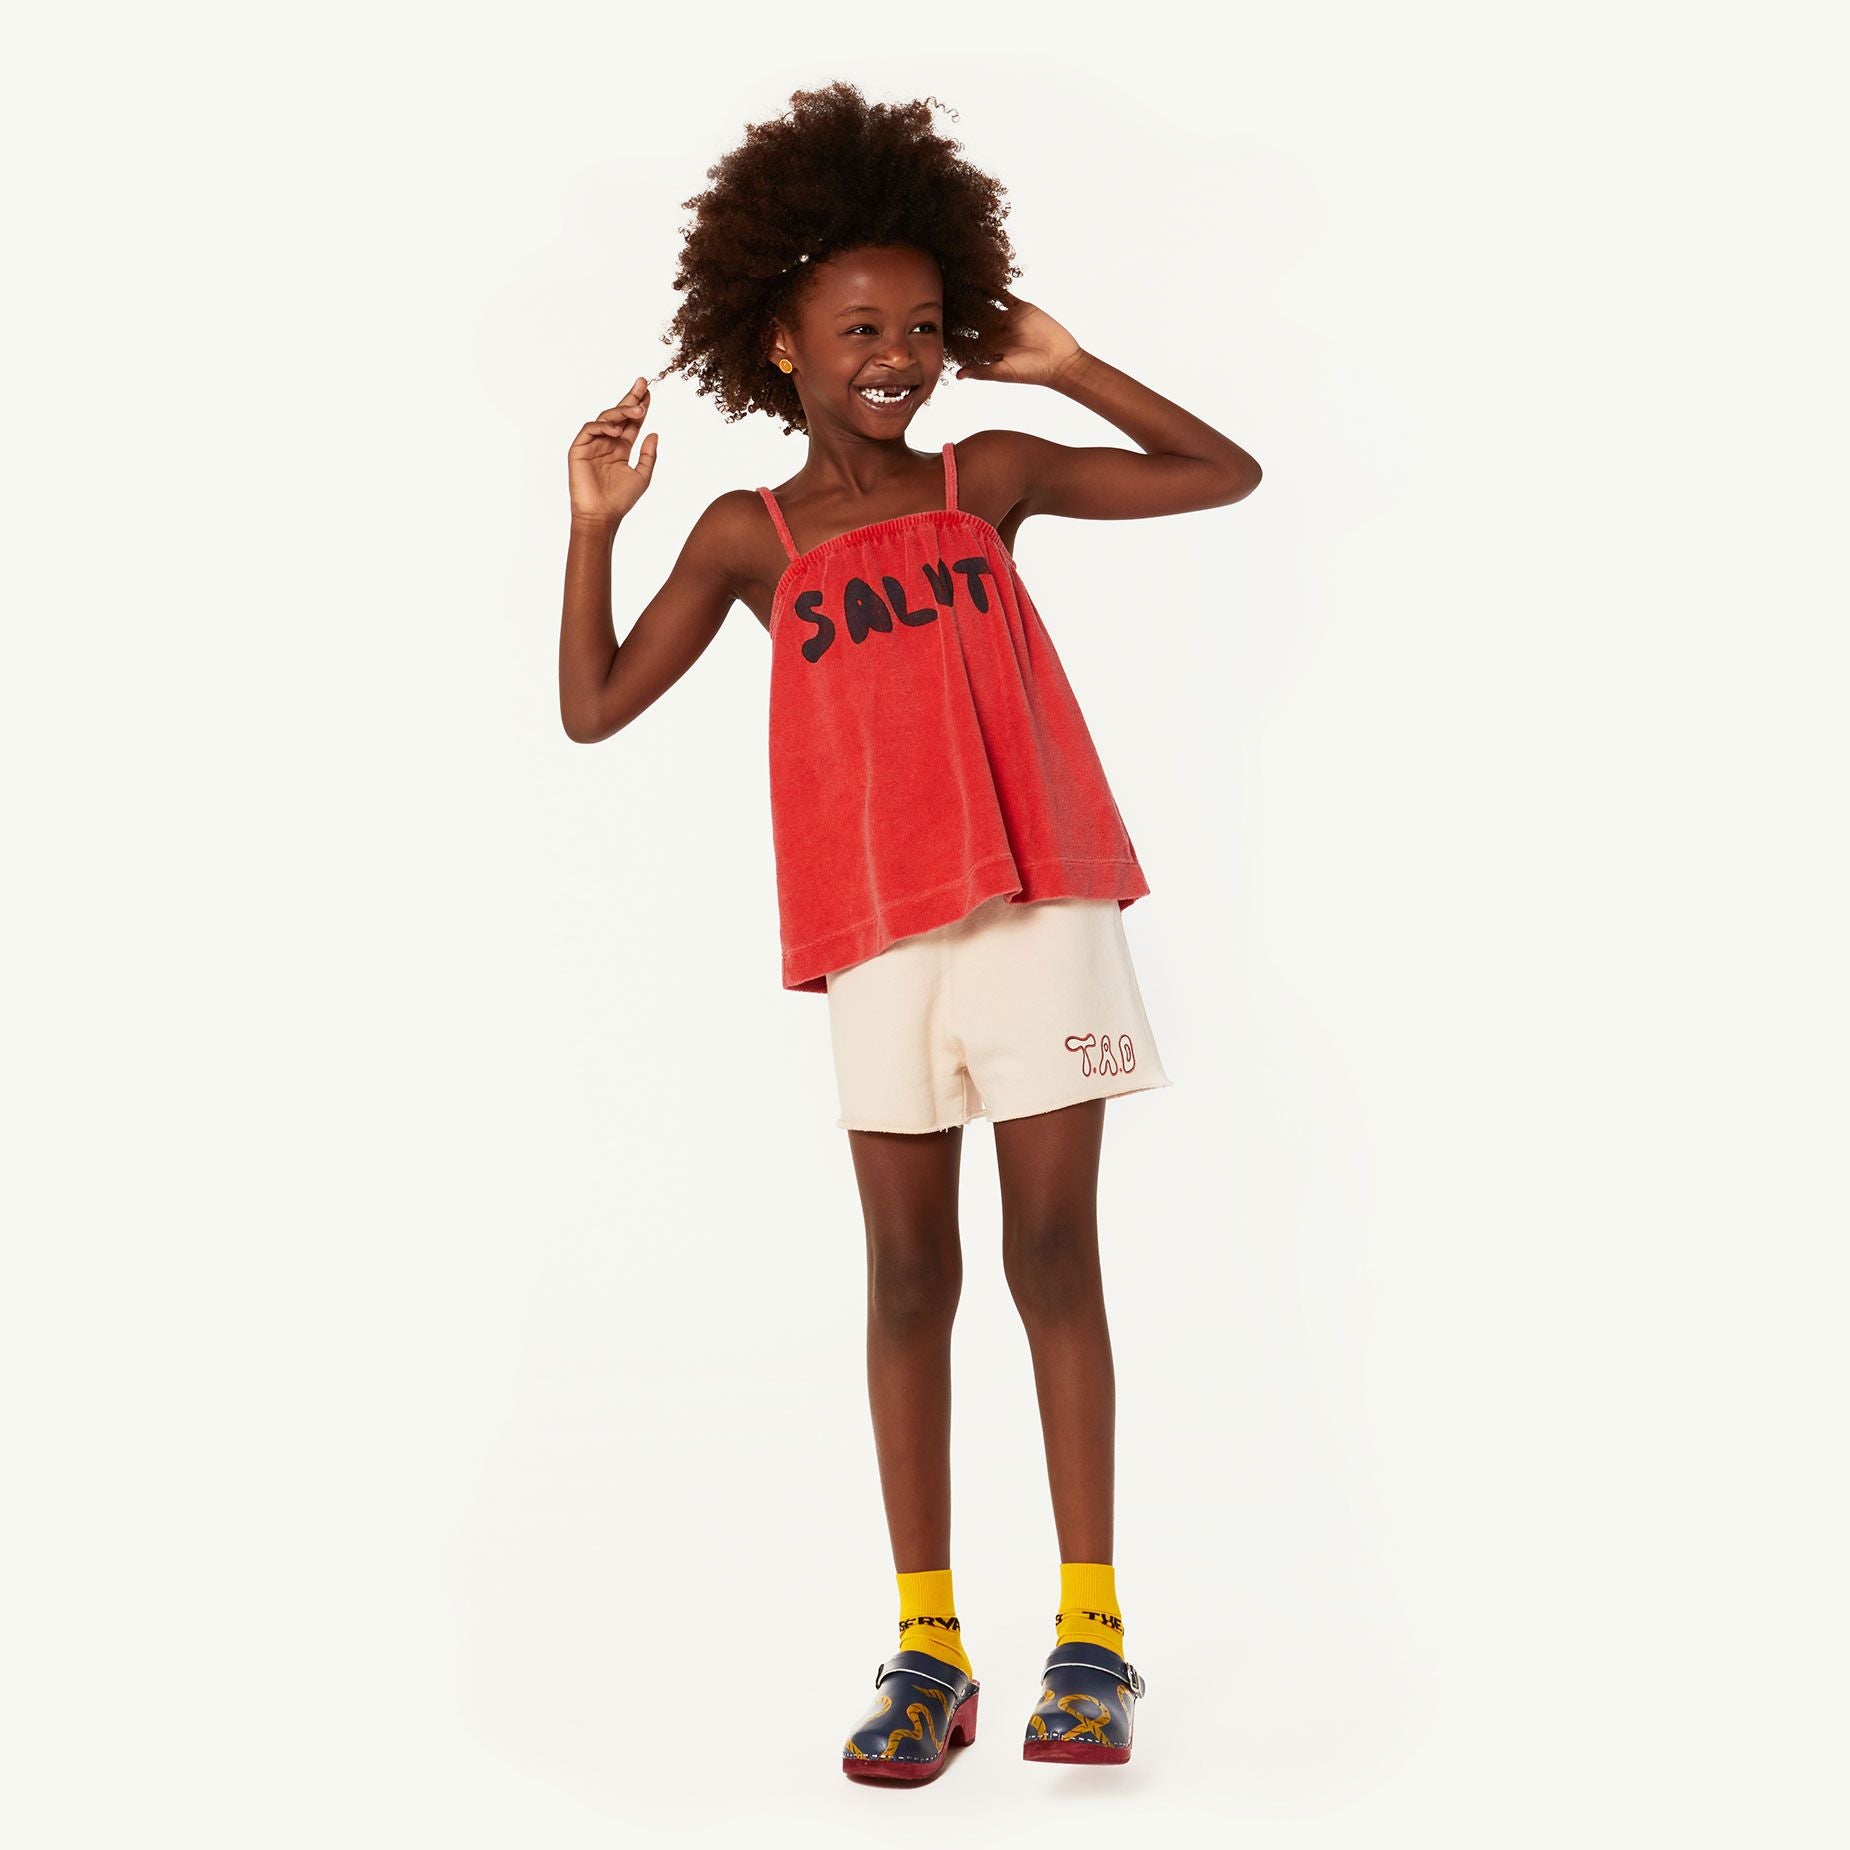 STORK KIDS TOP, RED SALUT - Cemarose Children's Fashion Boutique